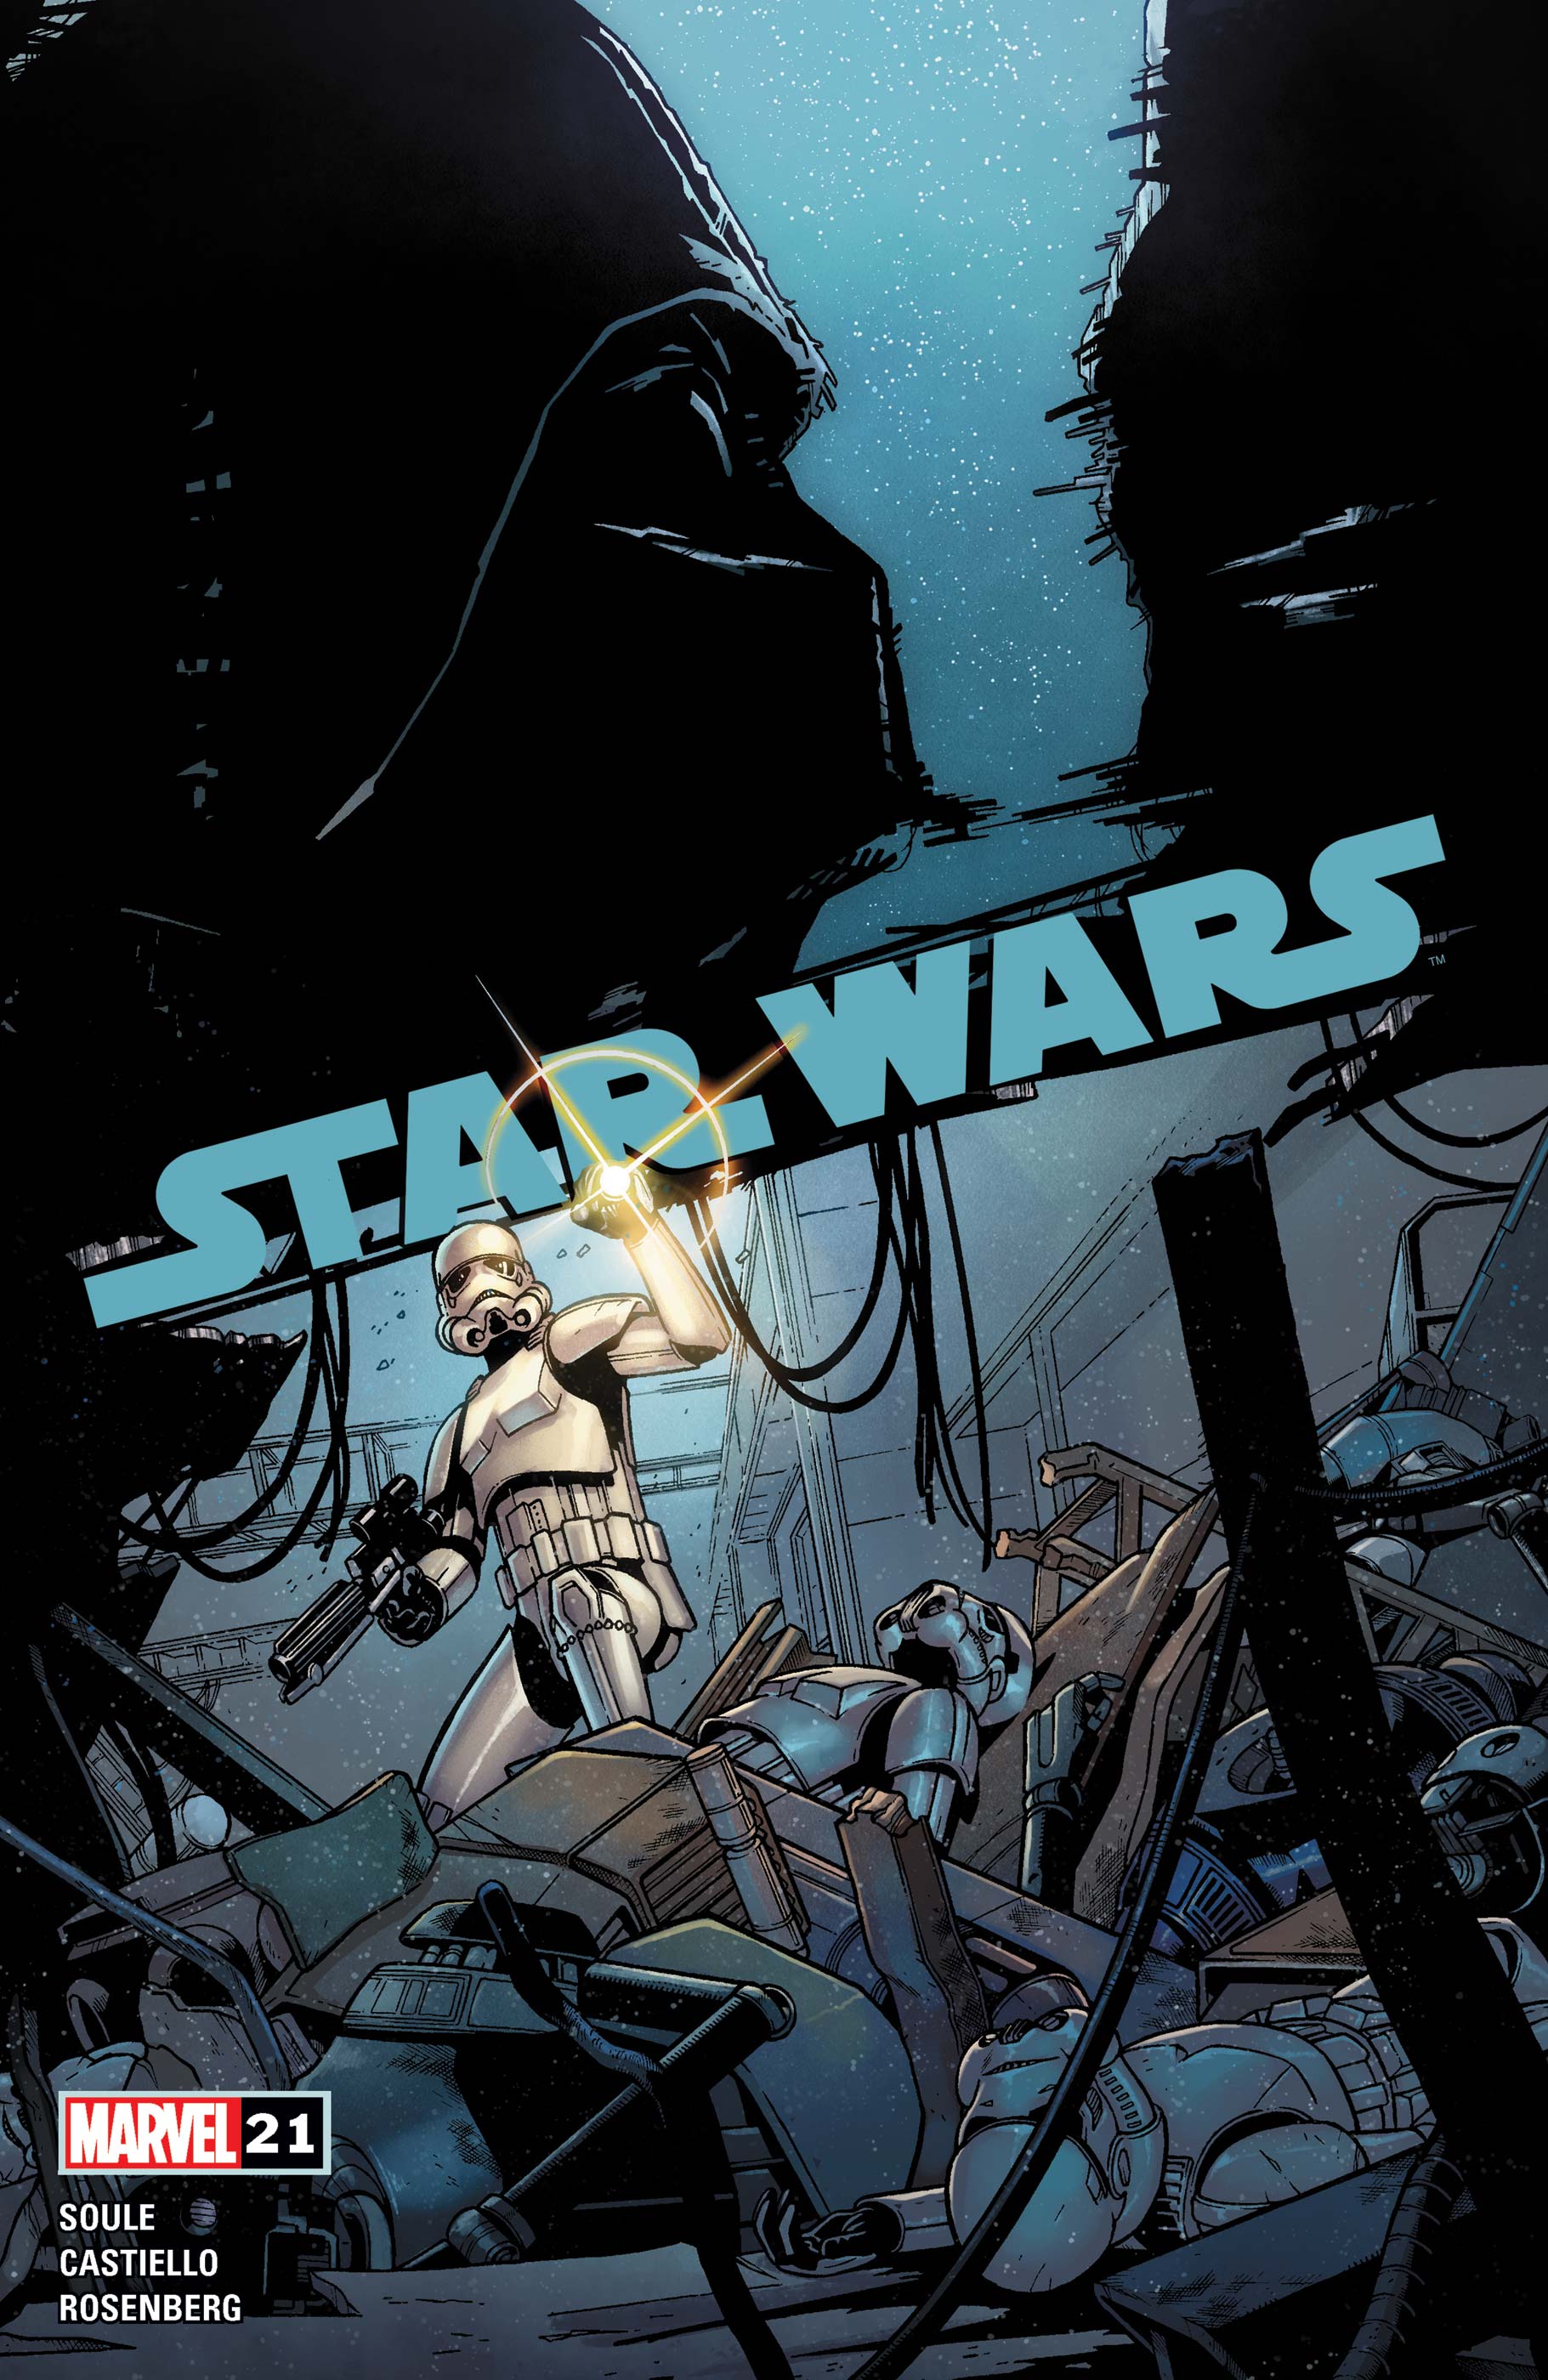 Star Wars (2020) #21